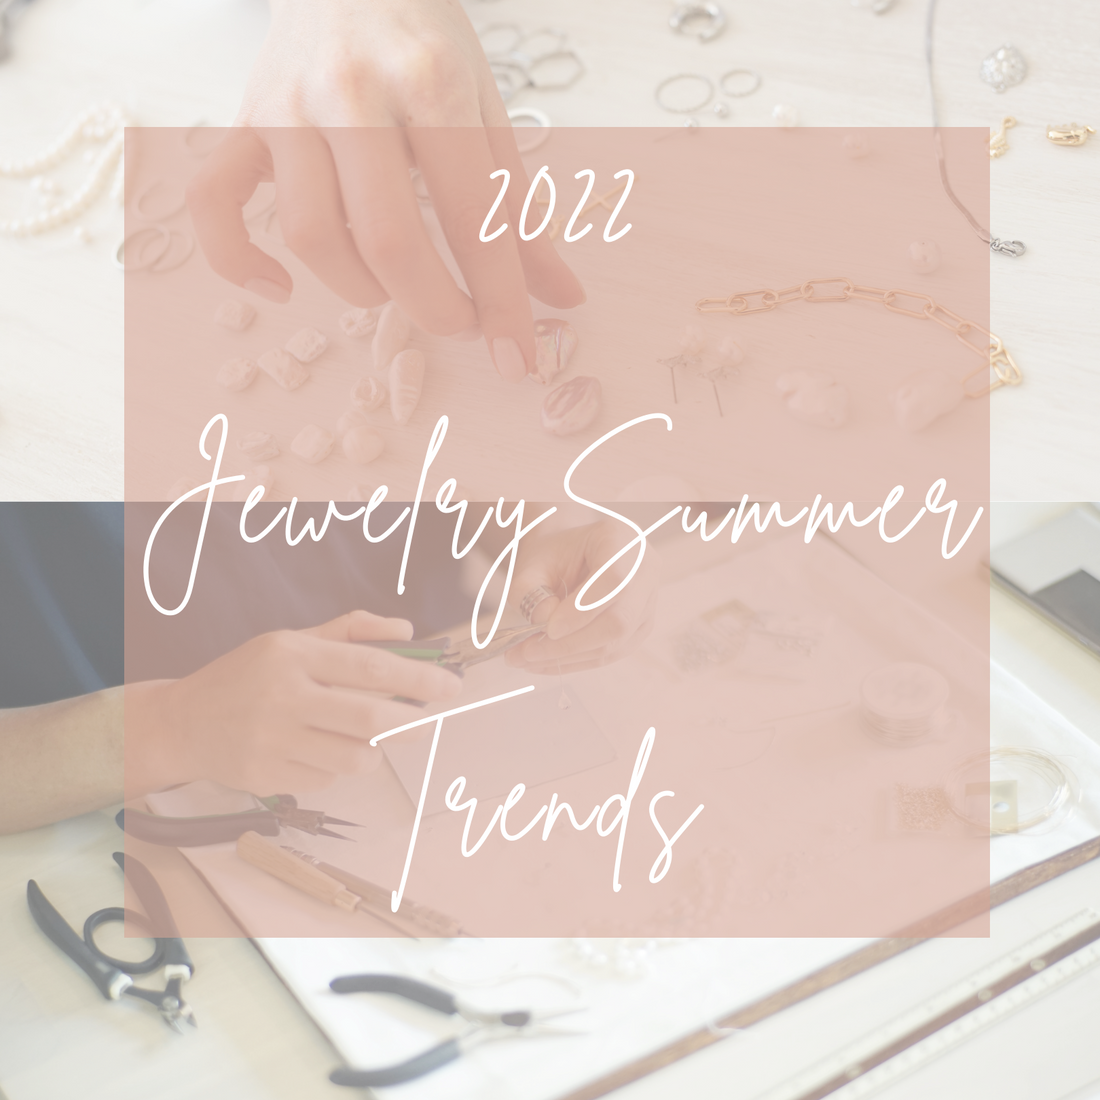 Summer 2022 Trends